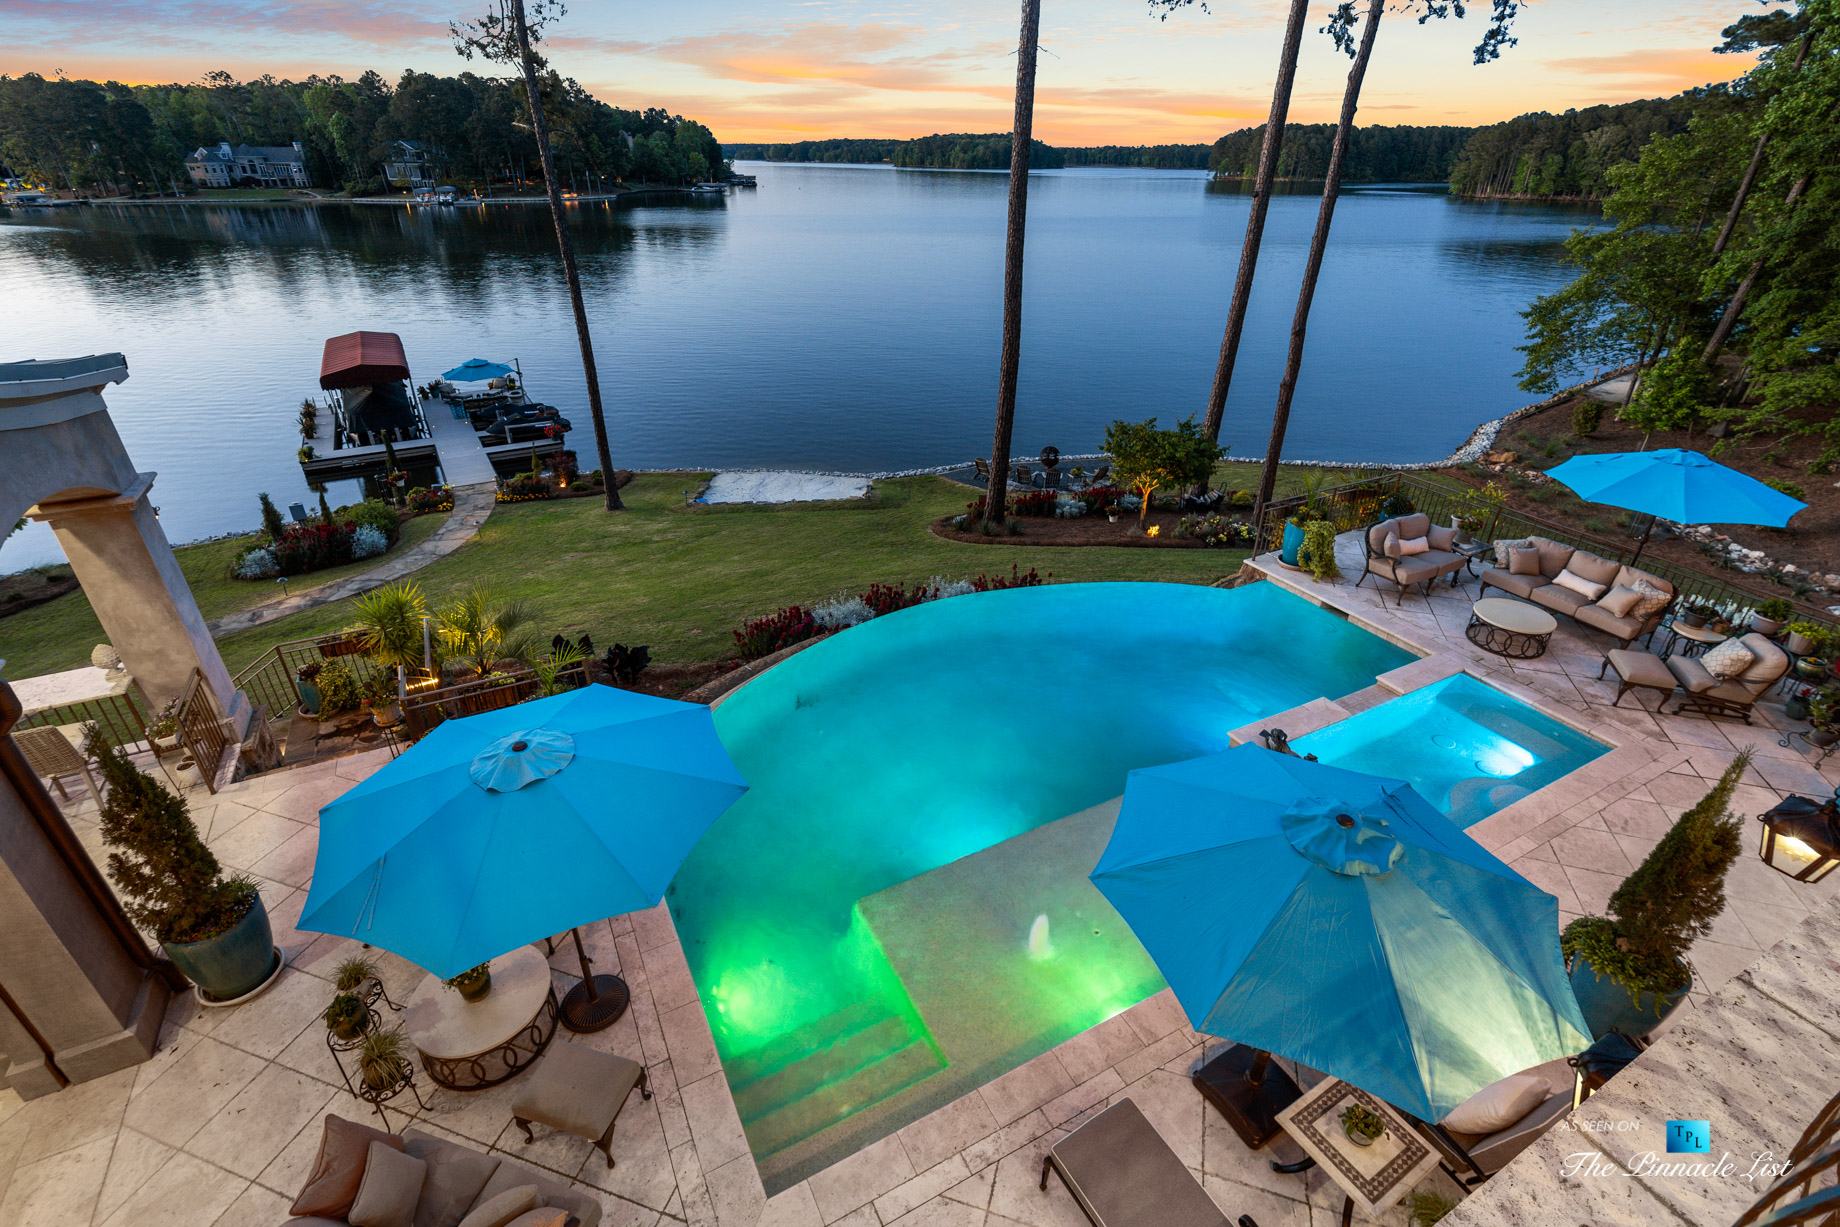 1200 Parrotts Cove Rd, Greensboro, GA, USA - Luxury Real Estate - Lake Oconee Mansion